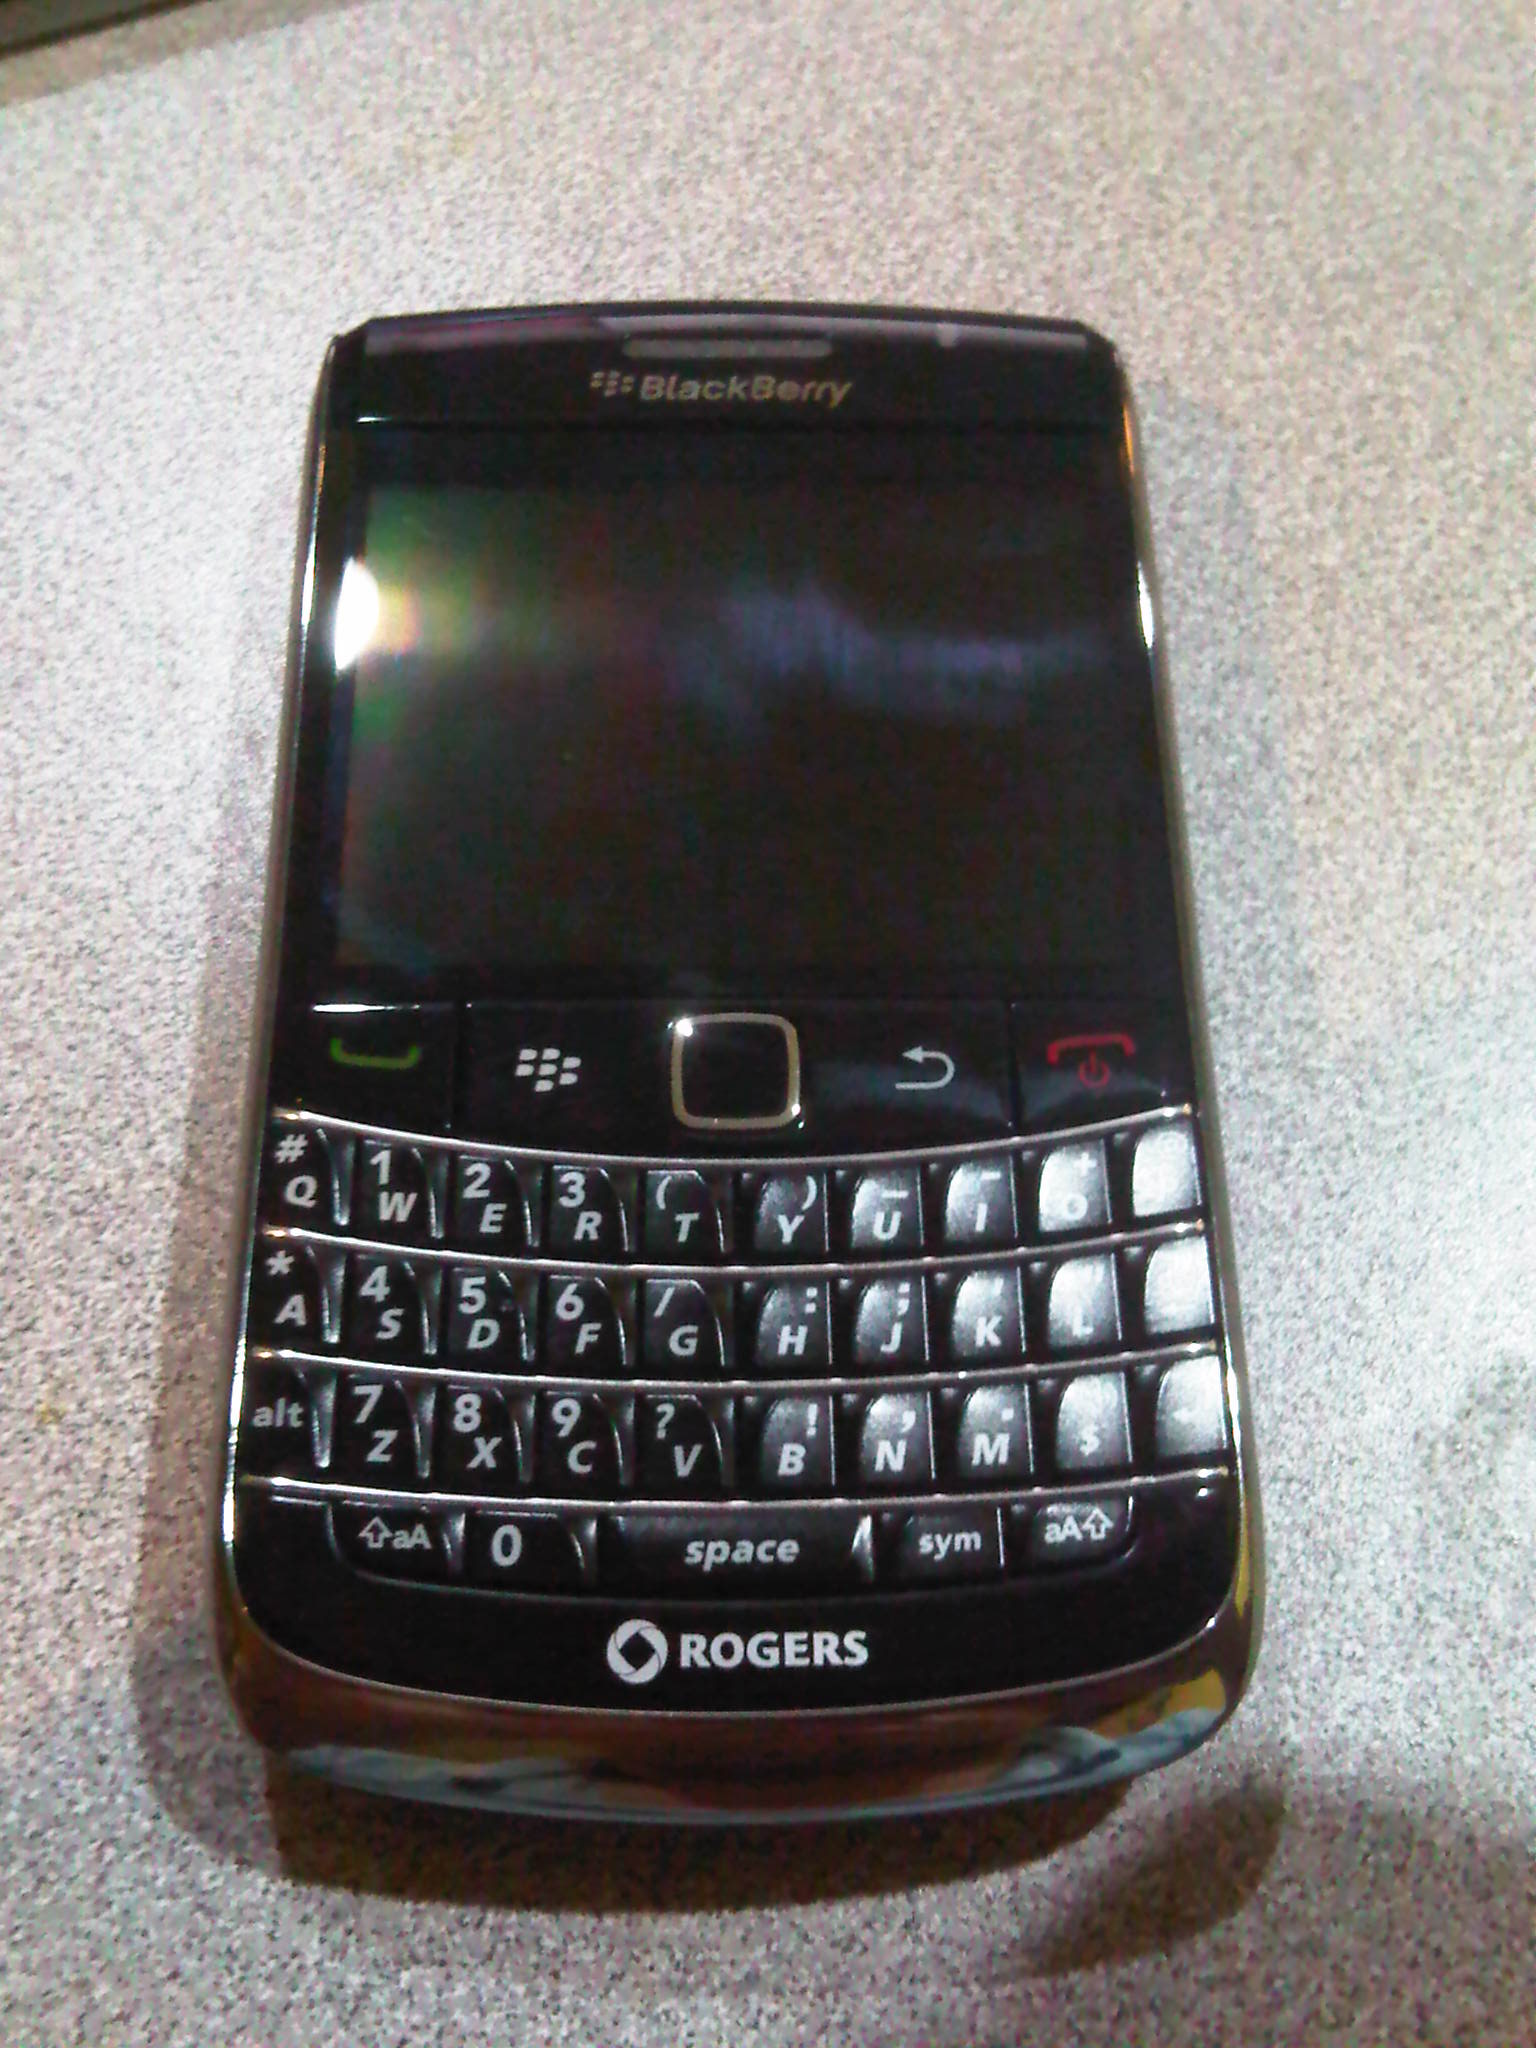 Blackberry Bold 9700 Rogers Price